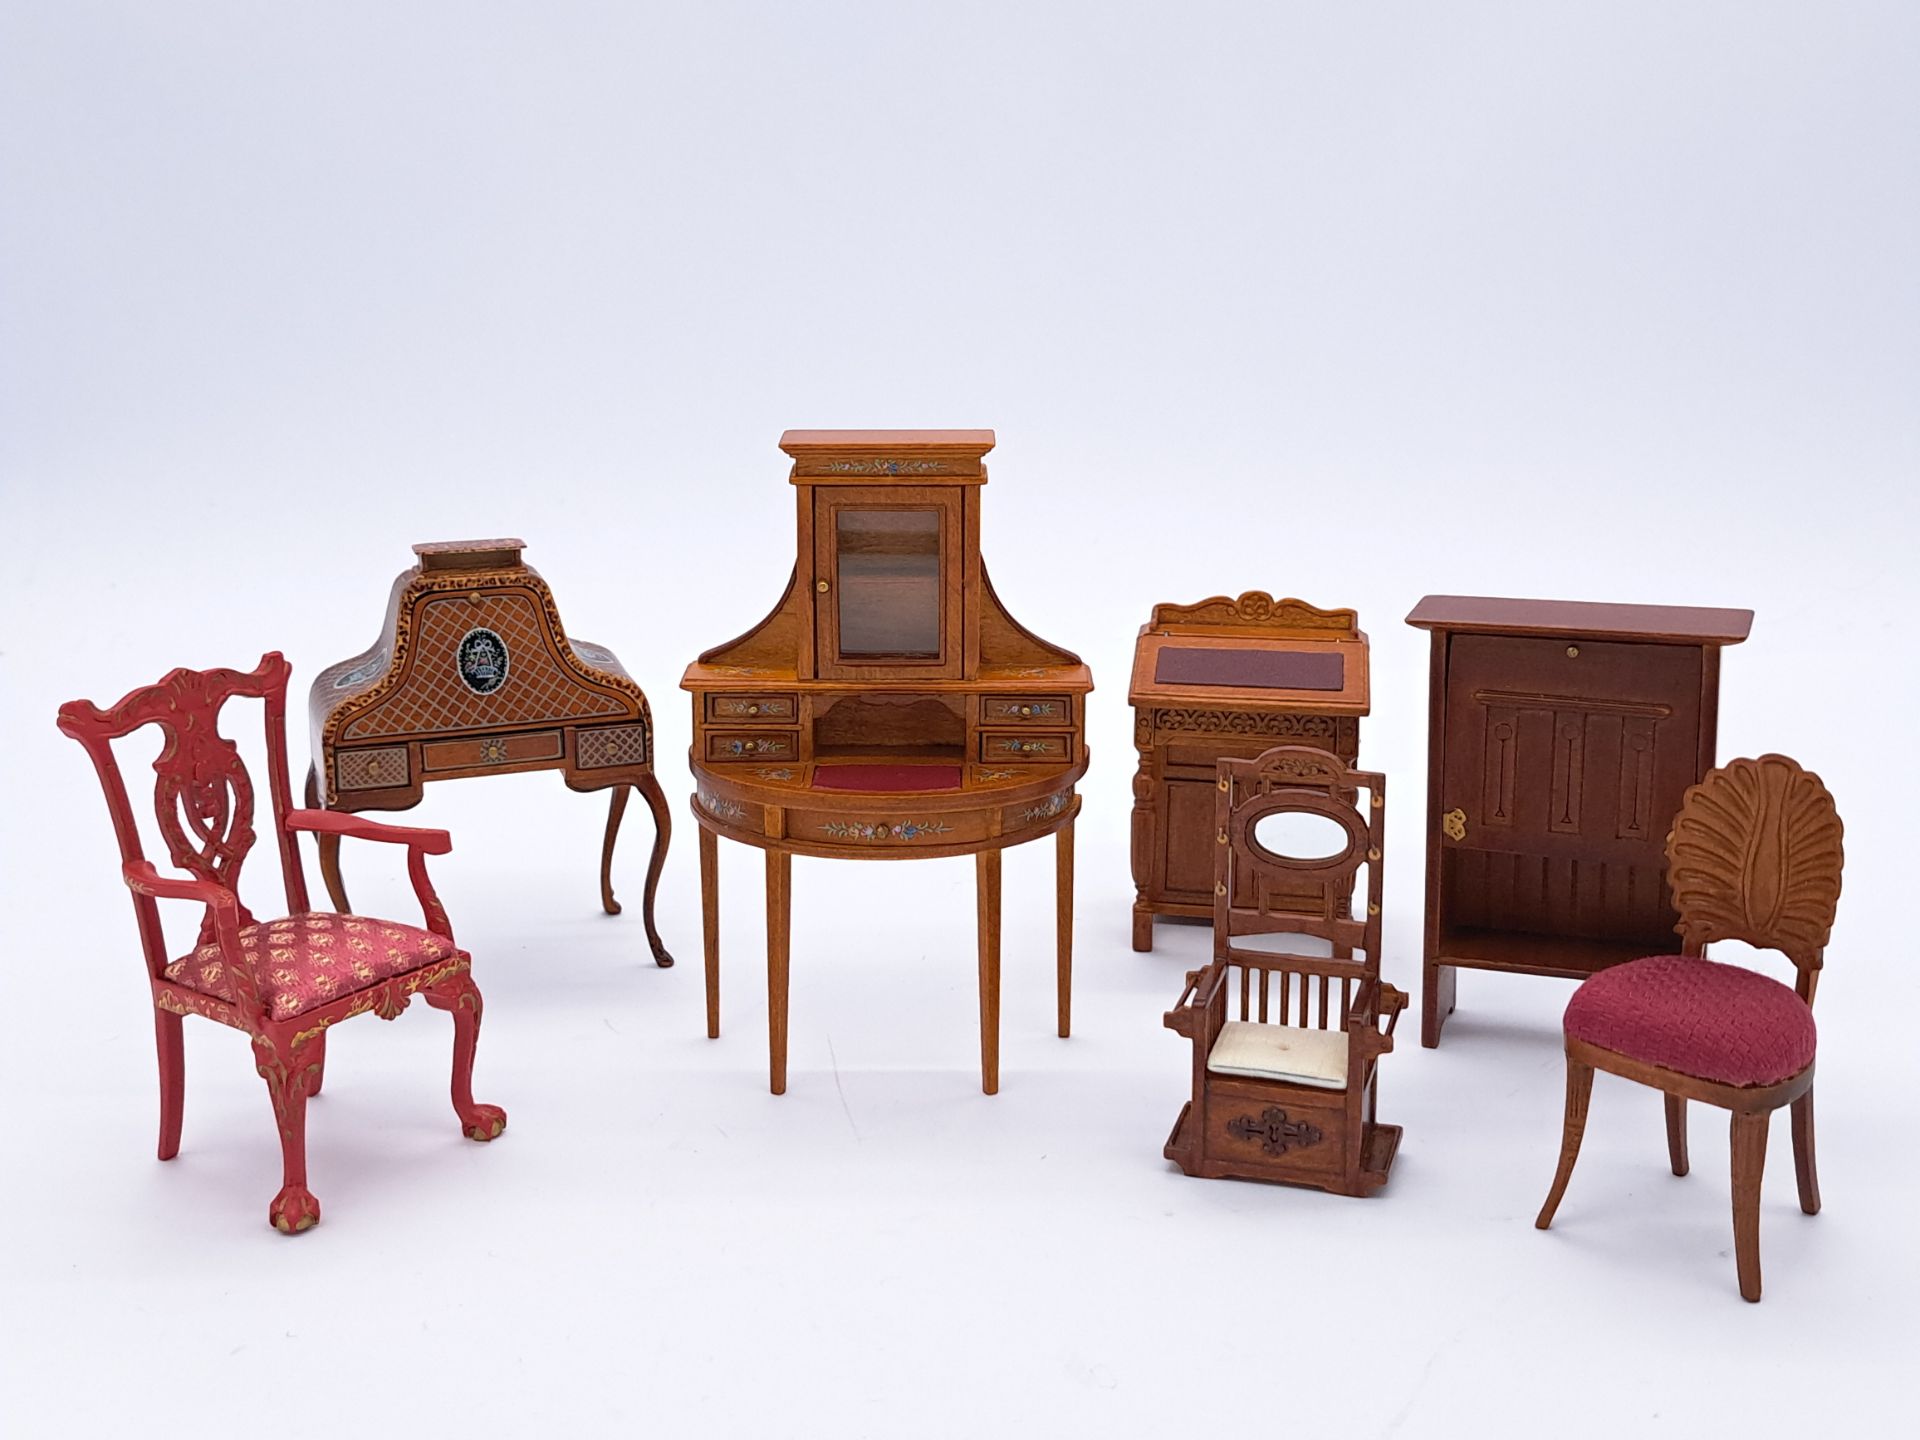 Fine dollhouse furniture including Bespaq